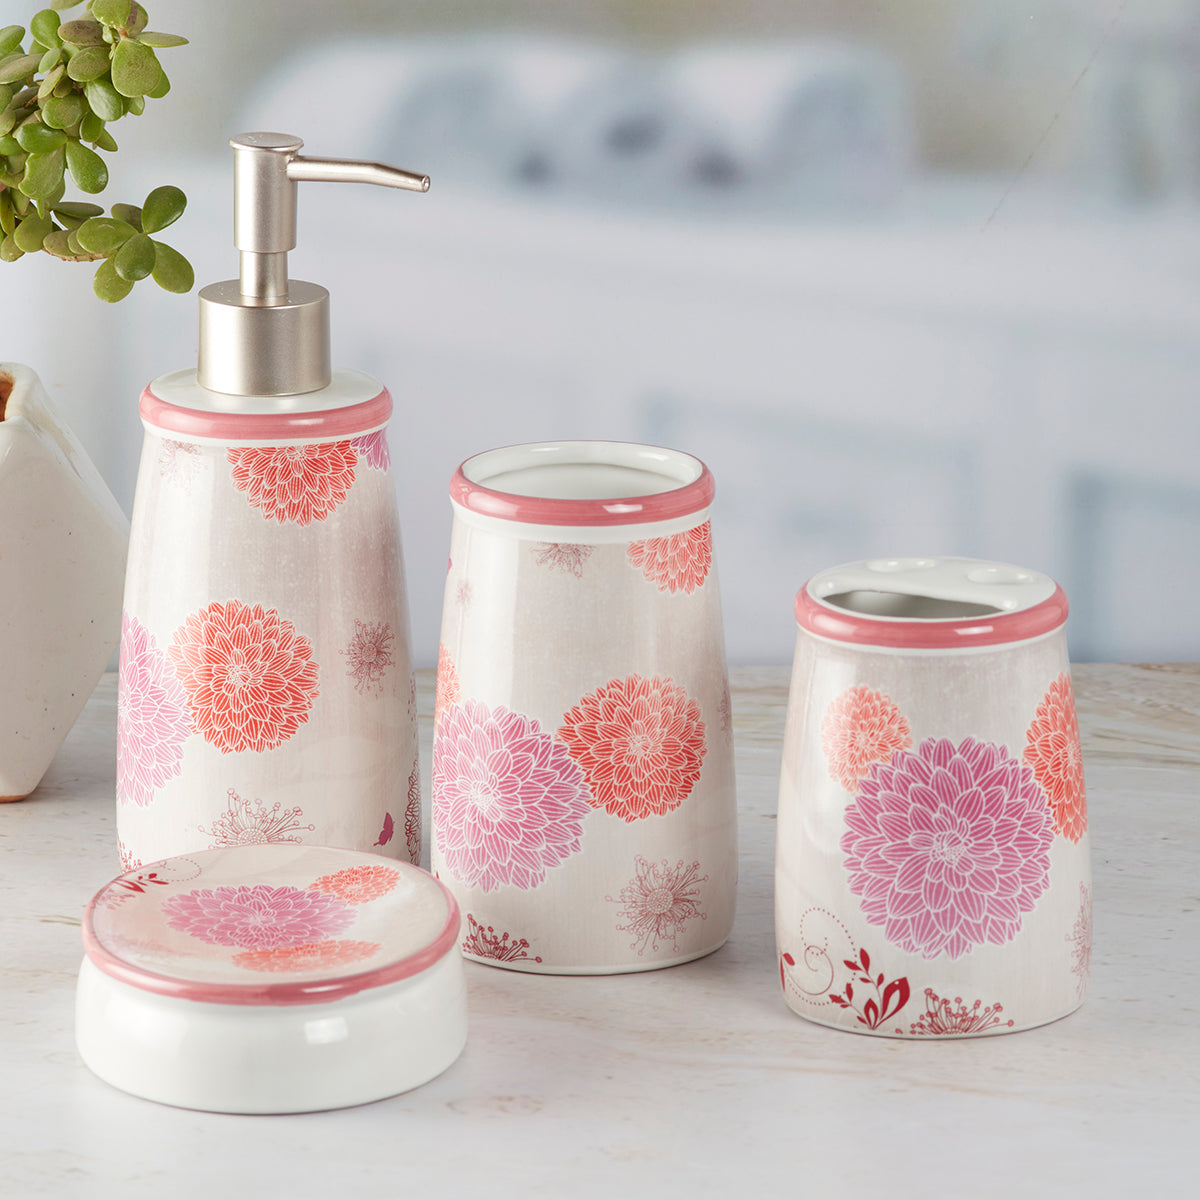 Ceramic Bathroom Accessories Set of 4 Bath Set with Soap Dispenser (8290)